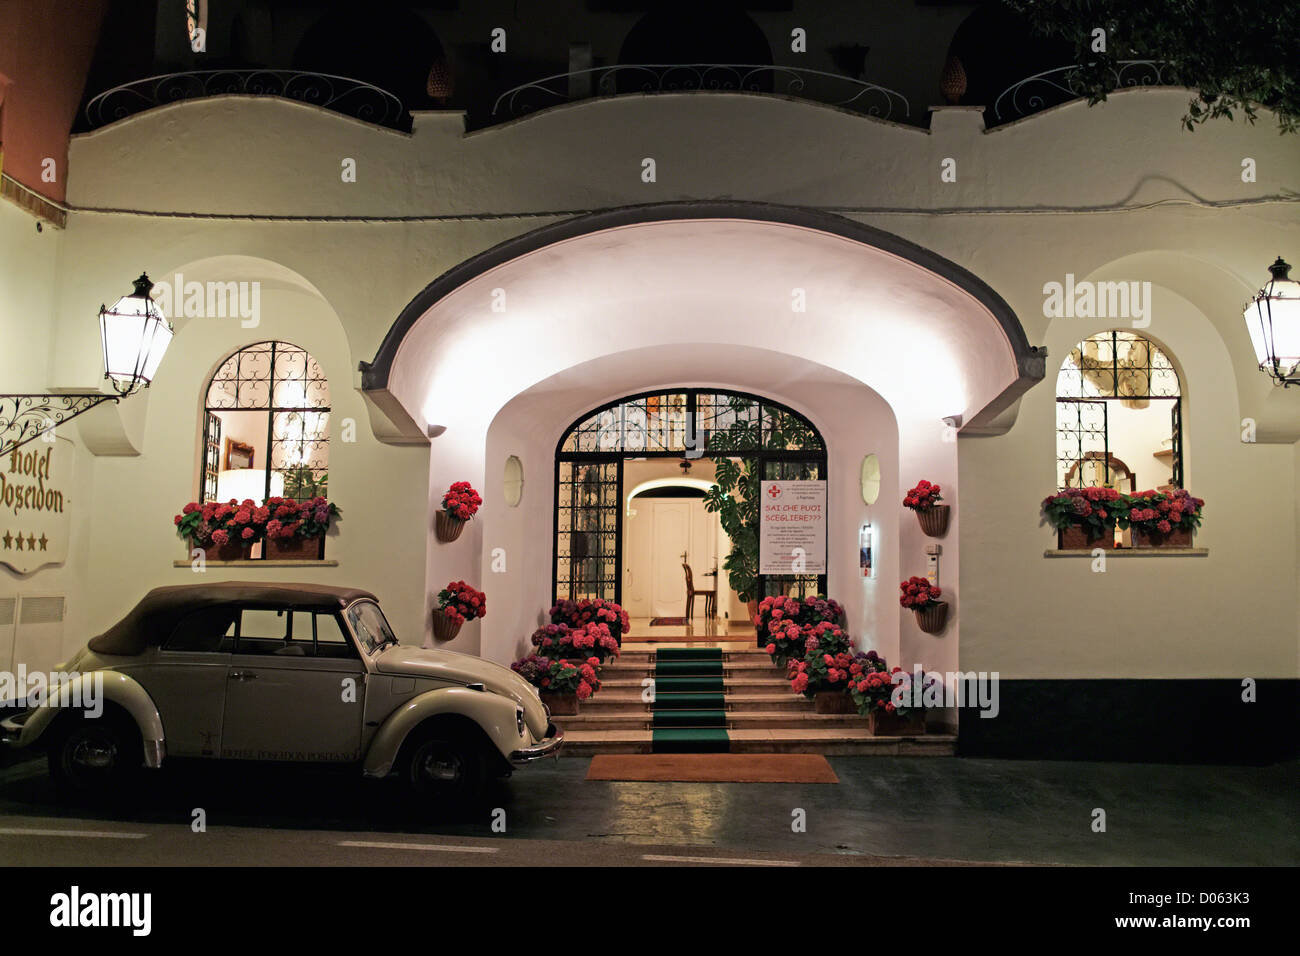 Entrance View of a Boutique Hotel at Night, Hotel Poseidon, Positano, Campania, Italy Stock Photo